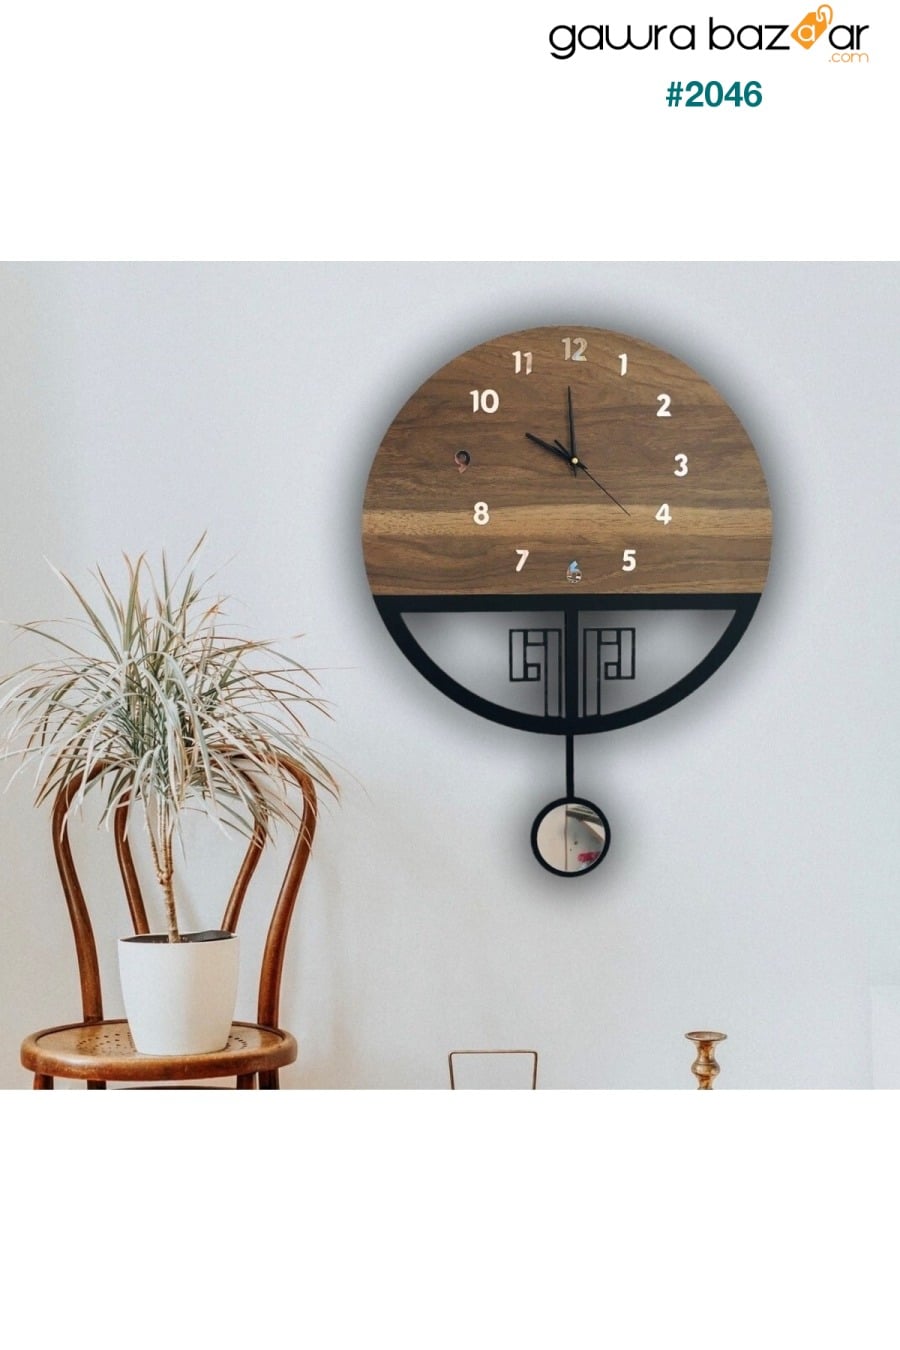 ساعة حائط خشبية بندول صامت ، ساعة بندول ، ساعة حائط ، ساعة حائط خشبية ، ساعة حائط بندول hayalevimahsap 0